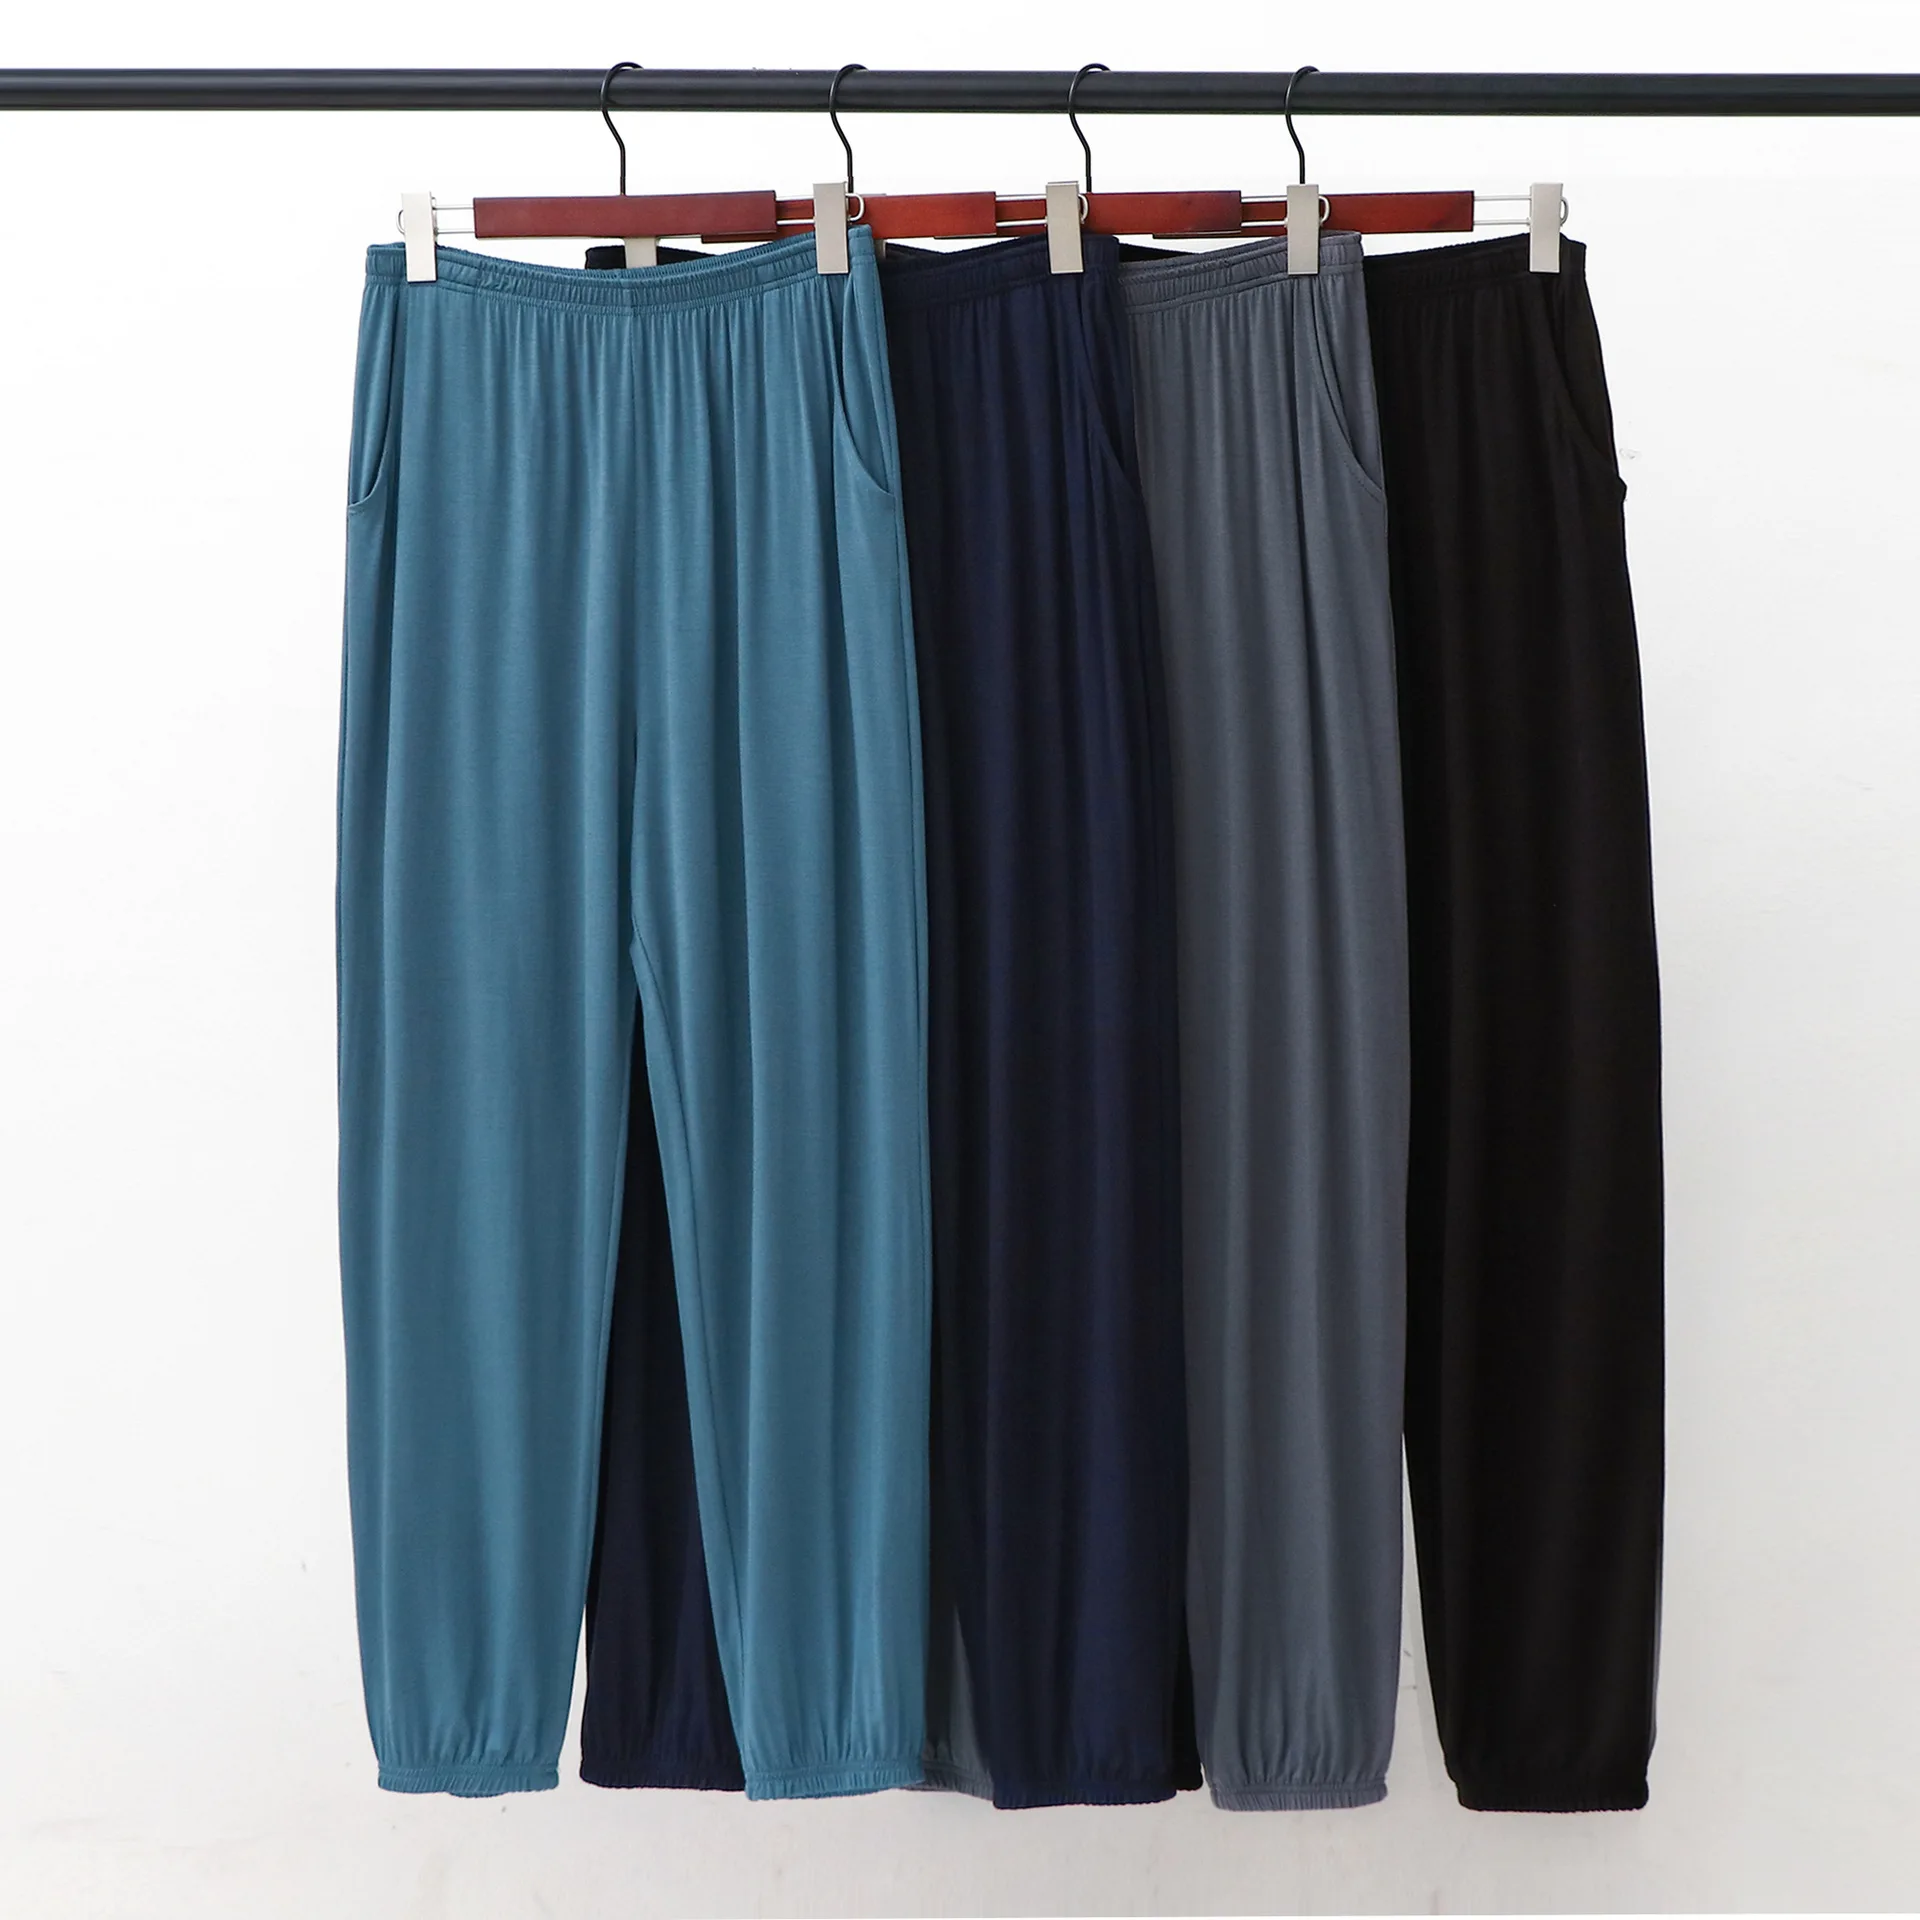 Fdfklak Casual Solid Color 4XL-6XL Sleepwear Men's Pajama Pants Spring Summer Modal Trousers for Men Pajamas Male Comfortable